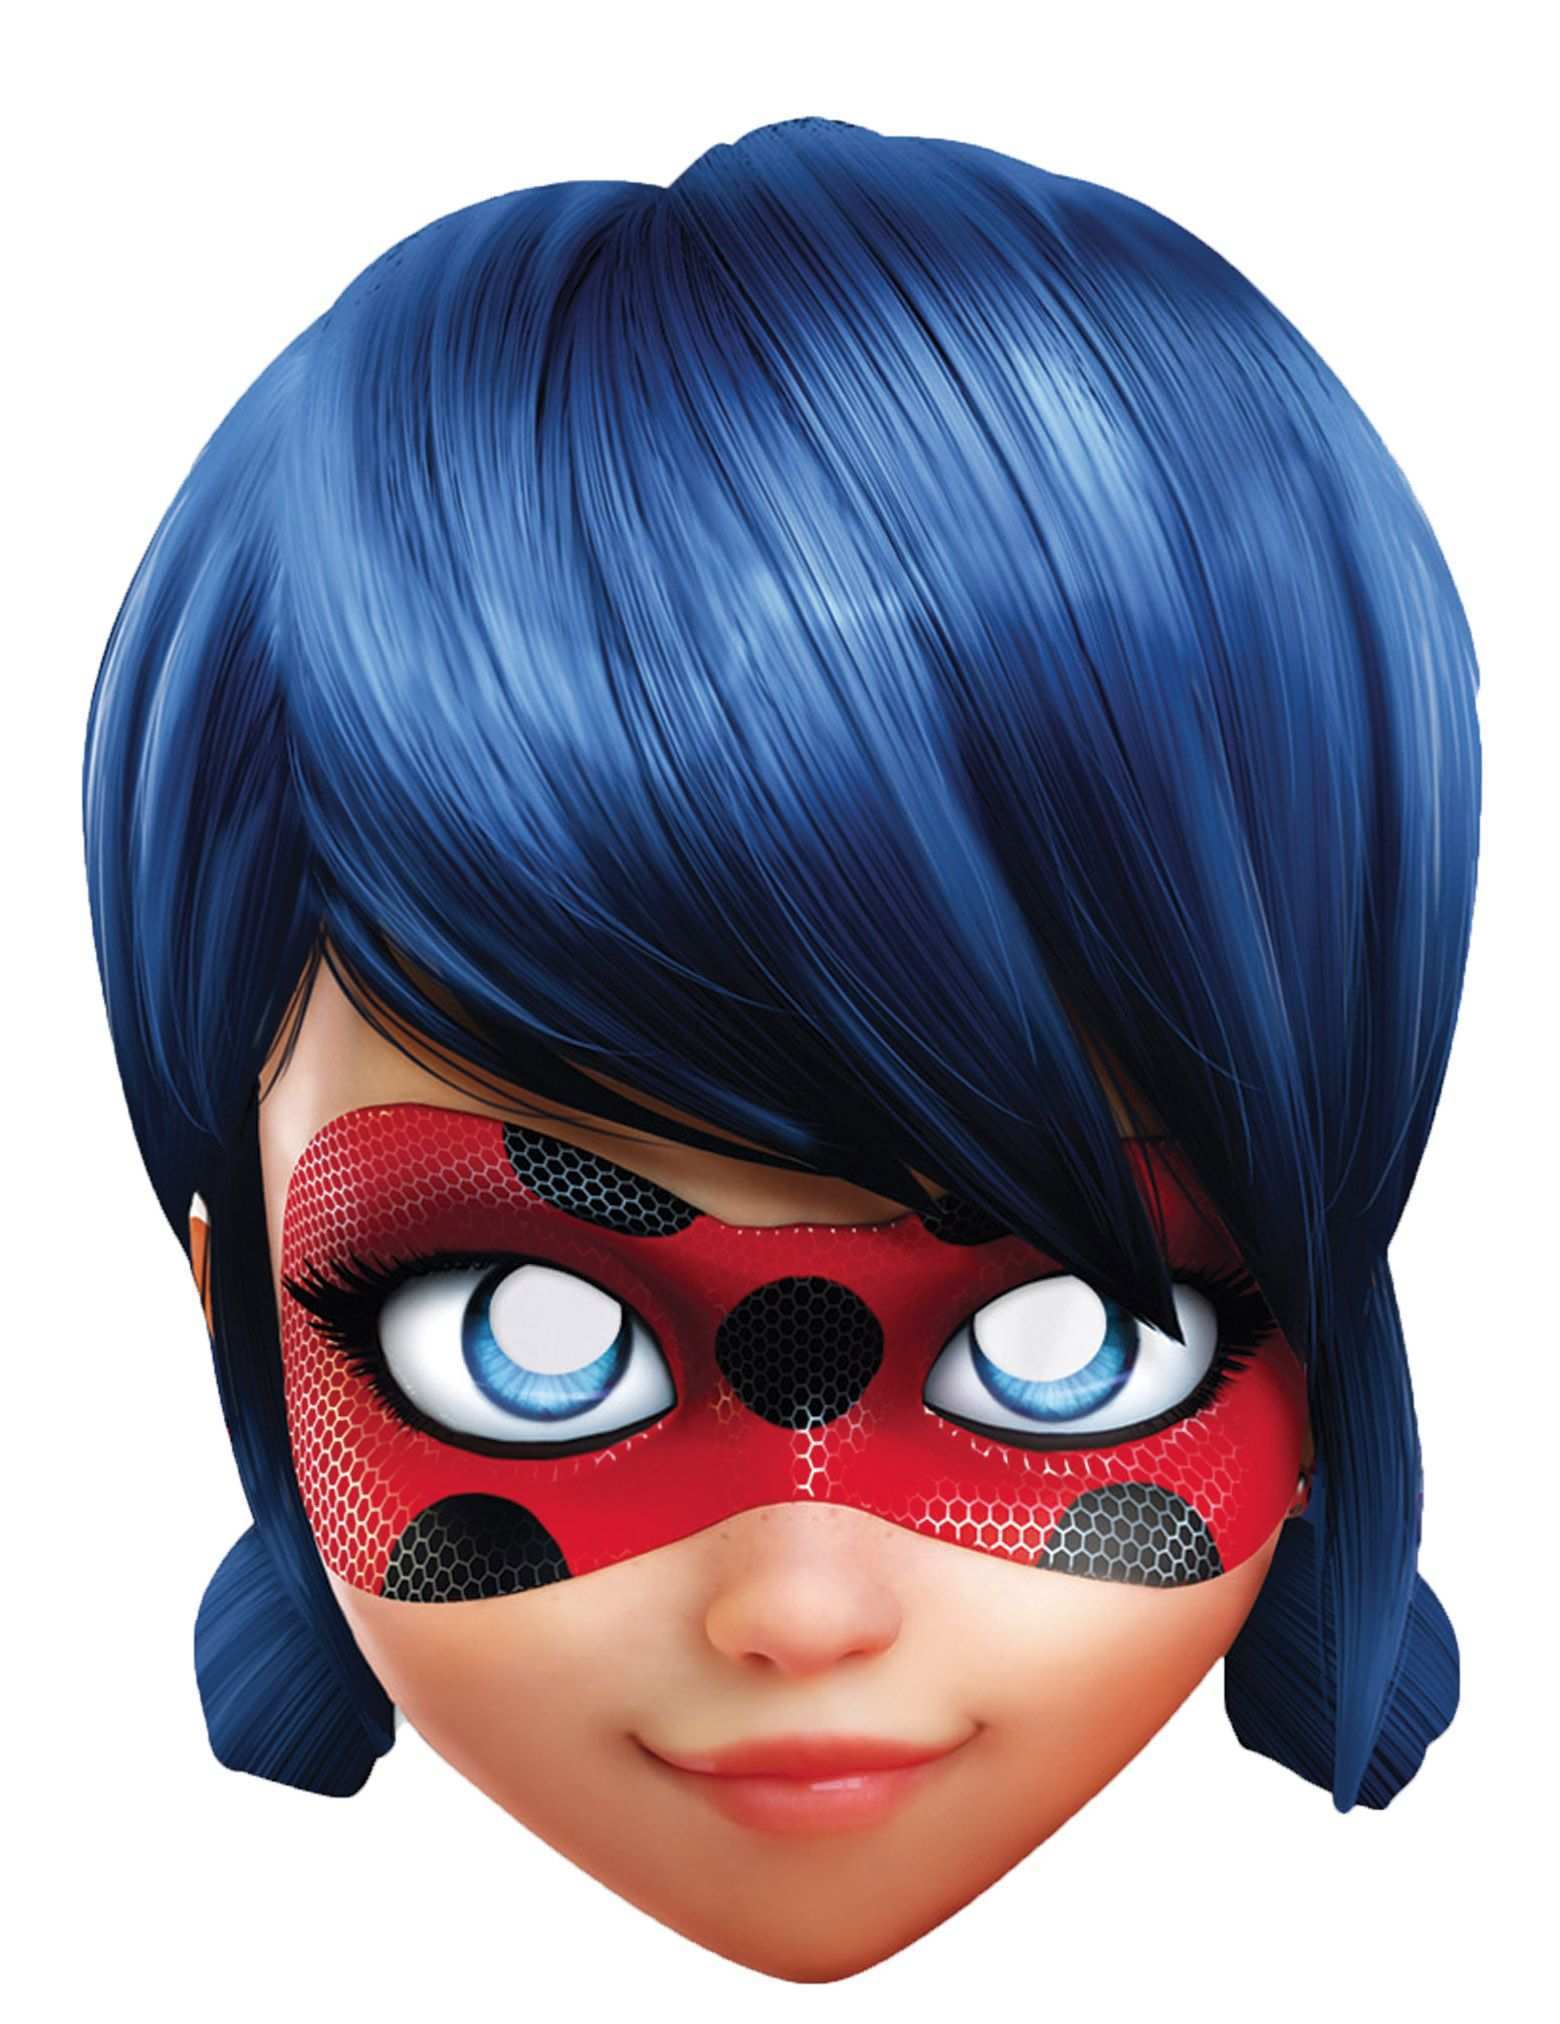 Ladybug Pappmaske Miraculous Lizenzmaske Fur Kinder Blau Beige Rot Gunstige Faschings Masken Bei Karneval Megastore Fasching Maske Party Masken Lady Bug